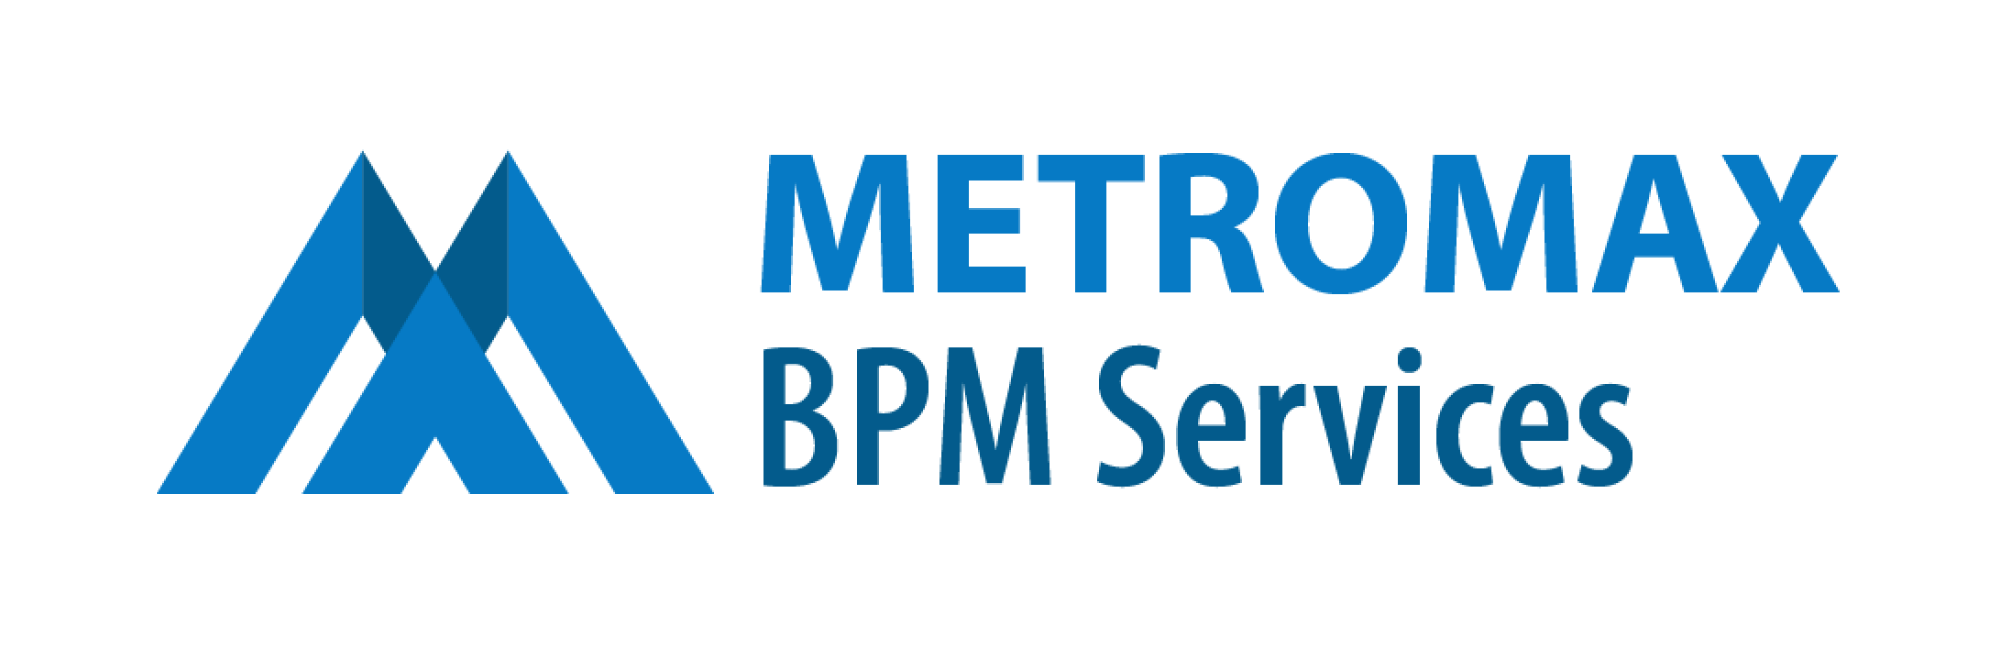 MetroMax BPM